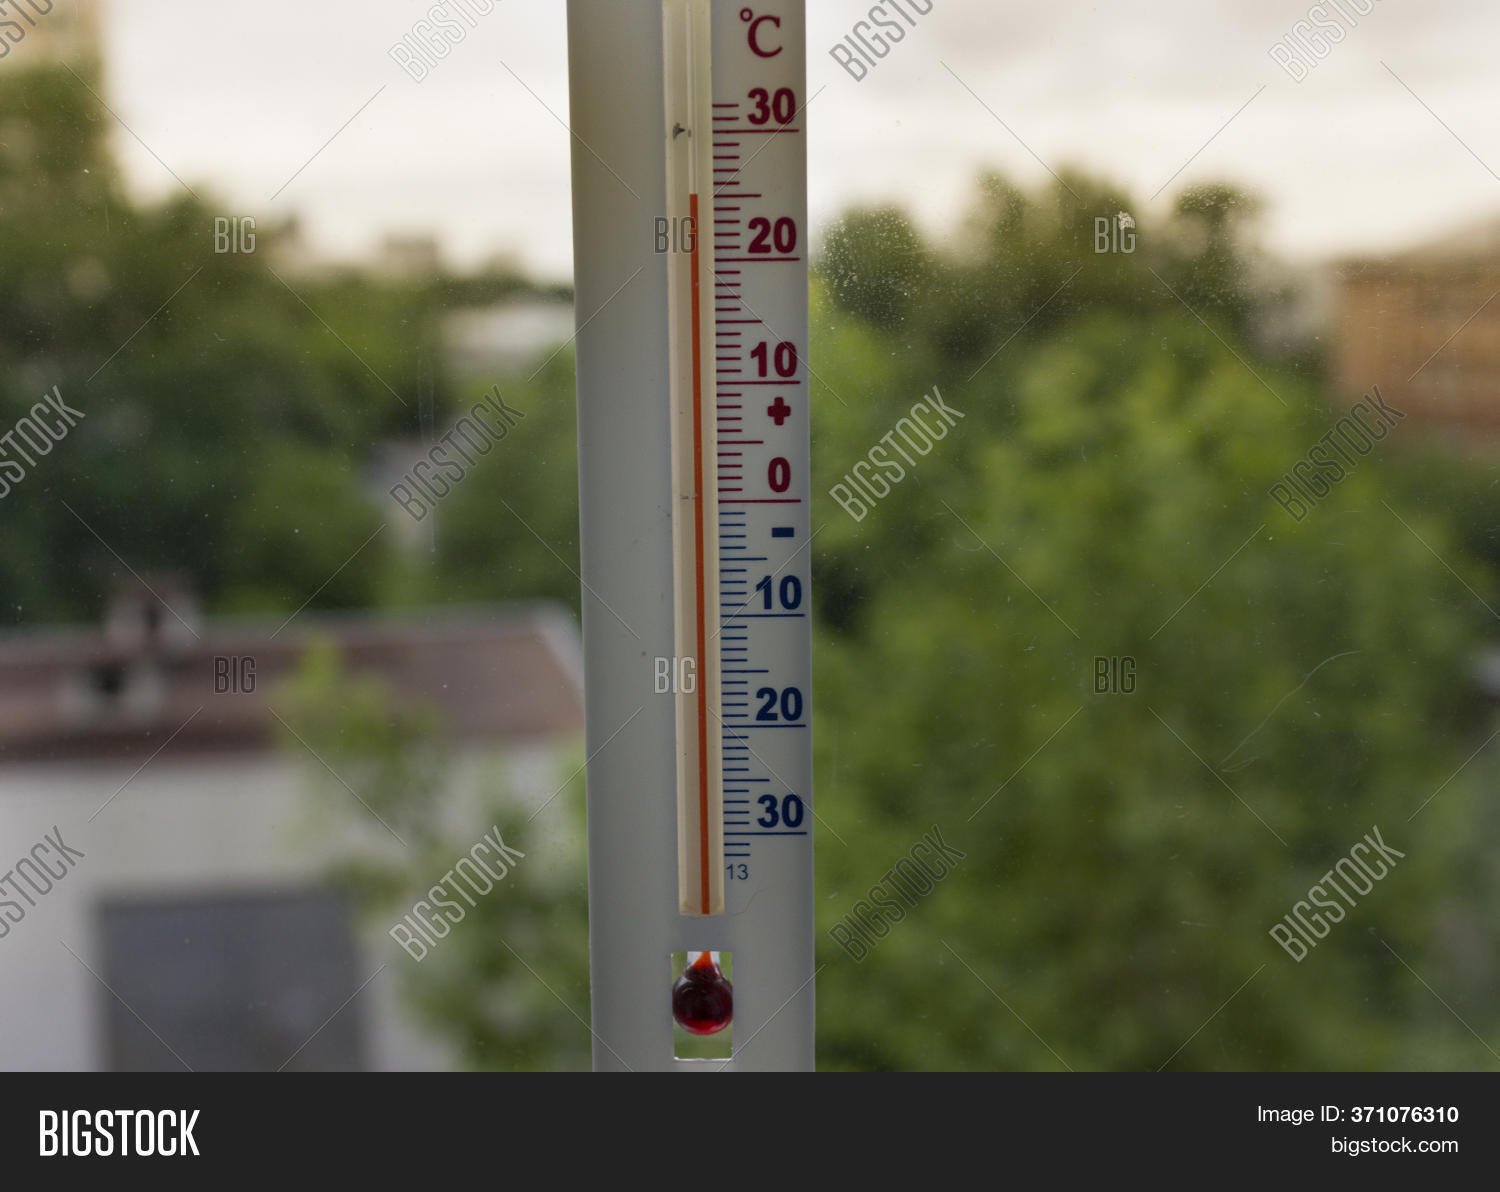 Температура на улице 0. Термометр 20 градусов поместили стеклянный. Термометр для улицы. Градусник с температурой на улице. Градусник уличный.